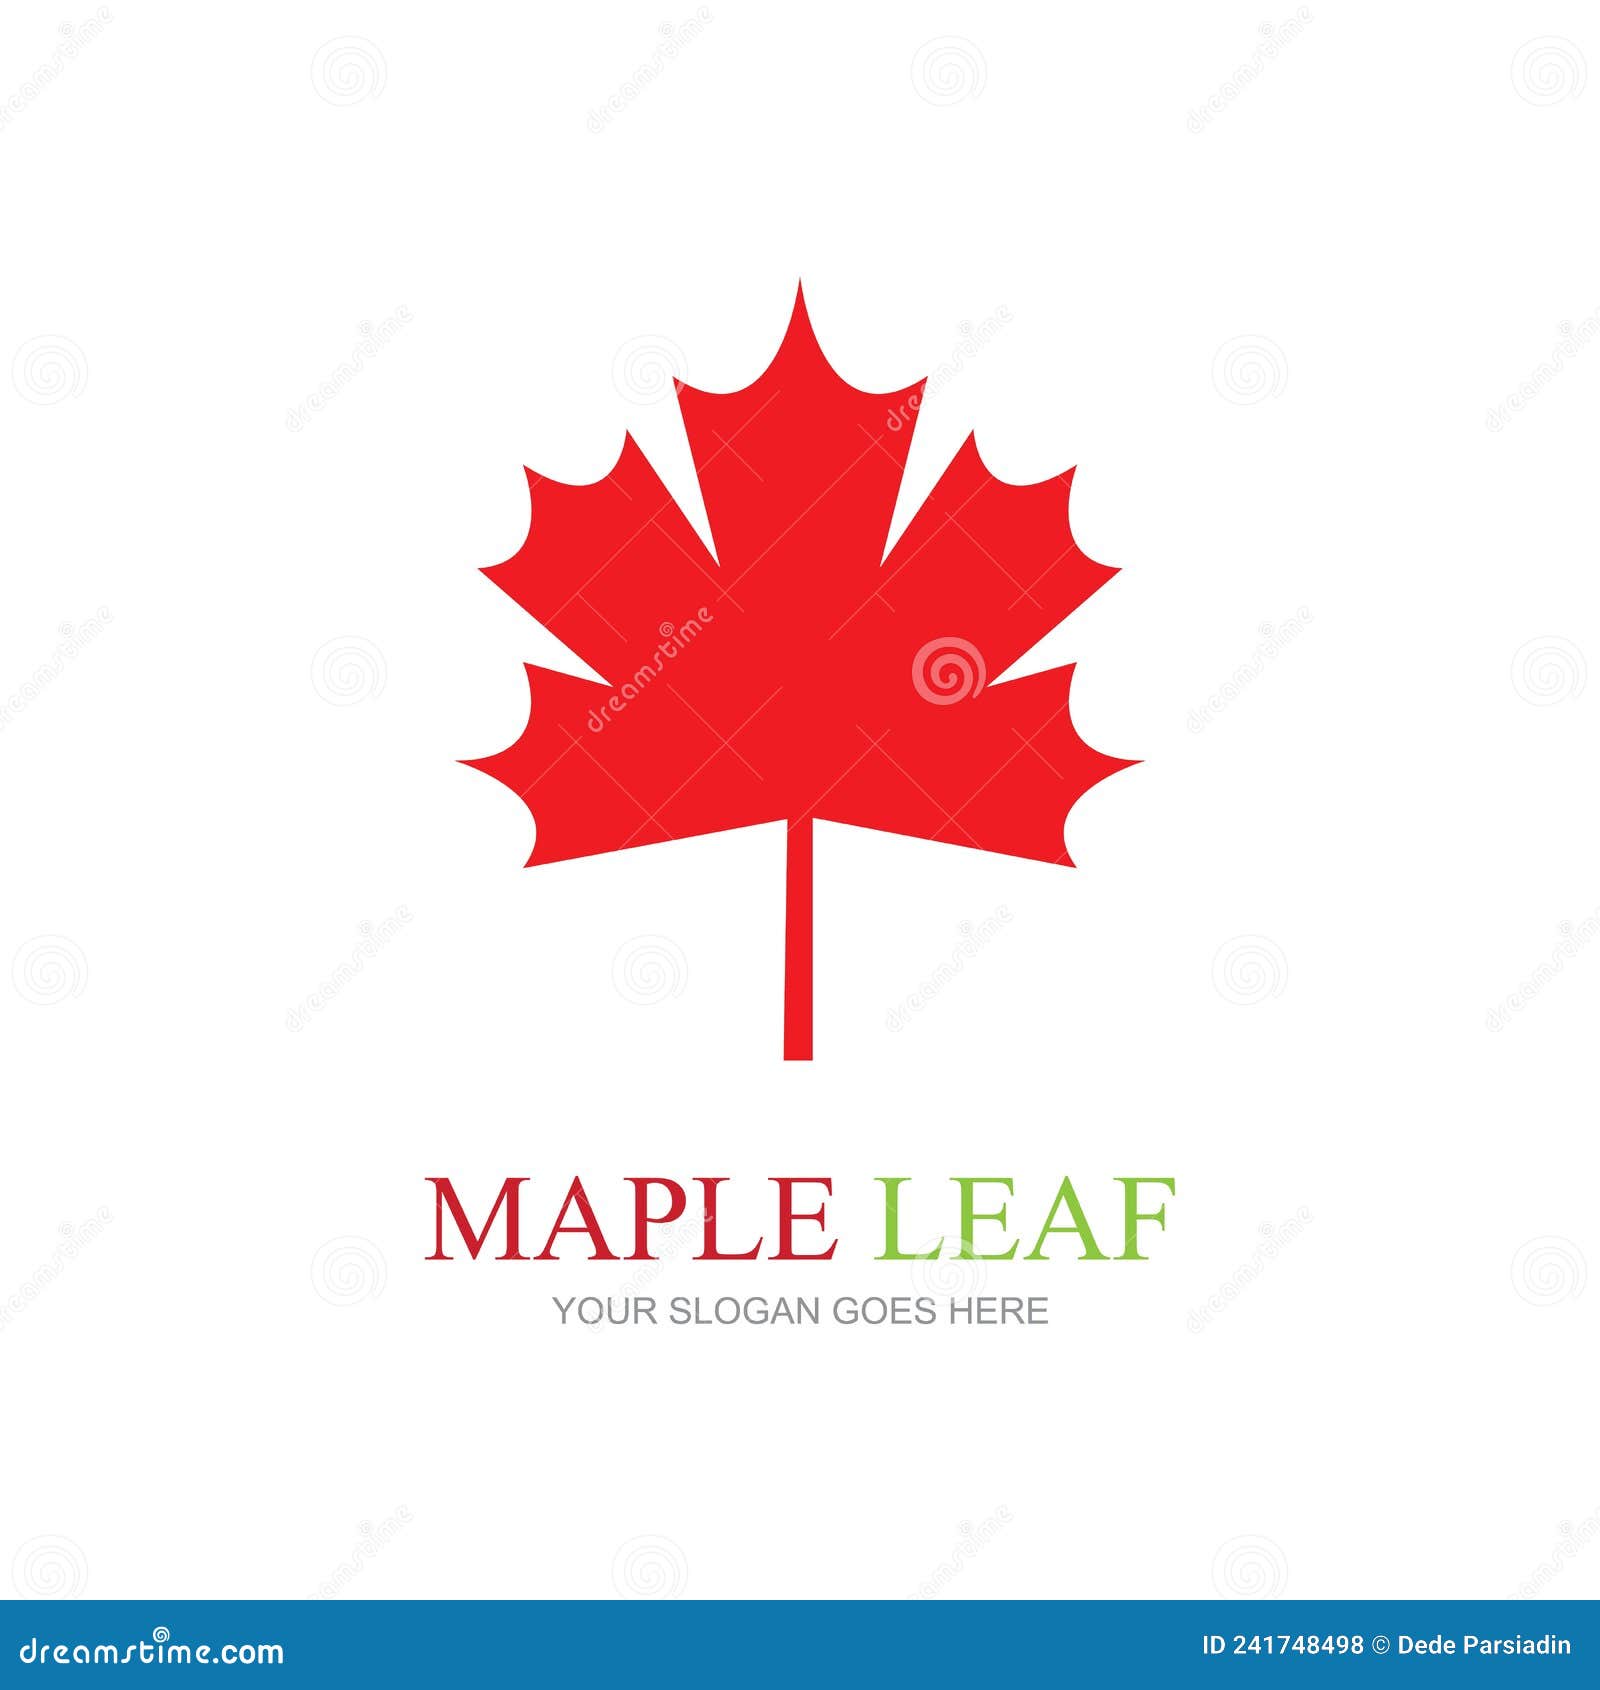 Maple leaf logo design Royalty Free Vector Image